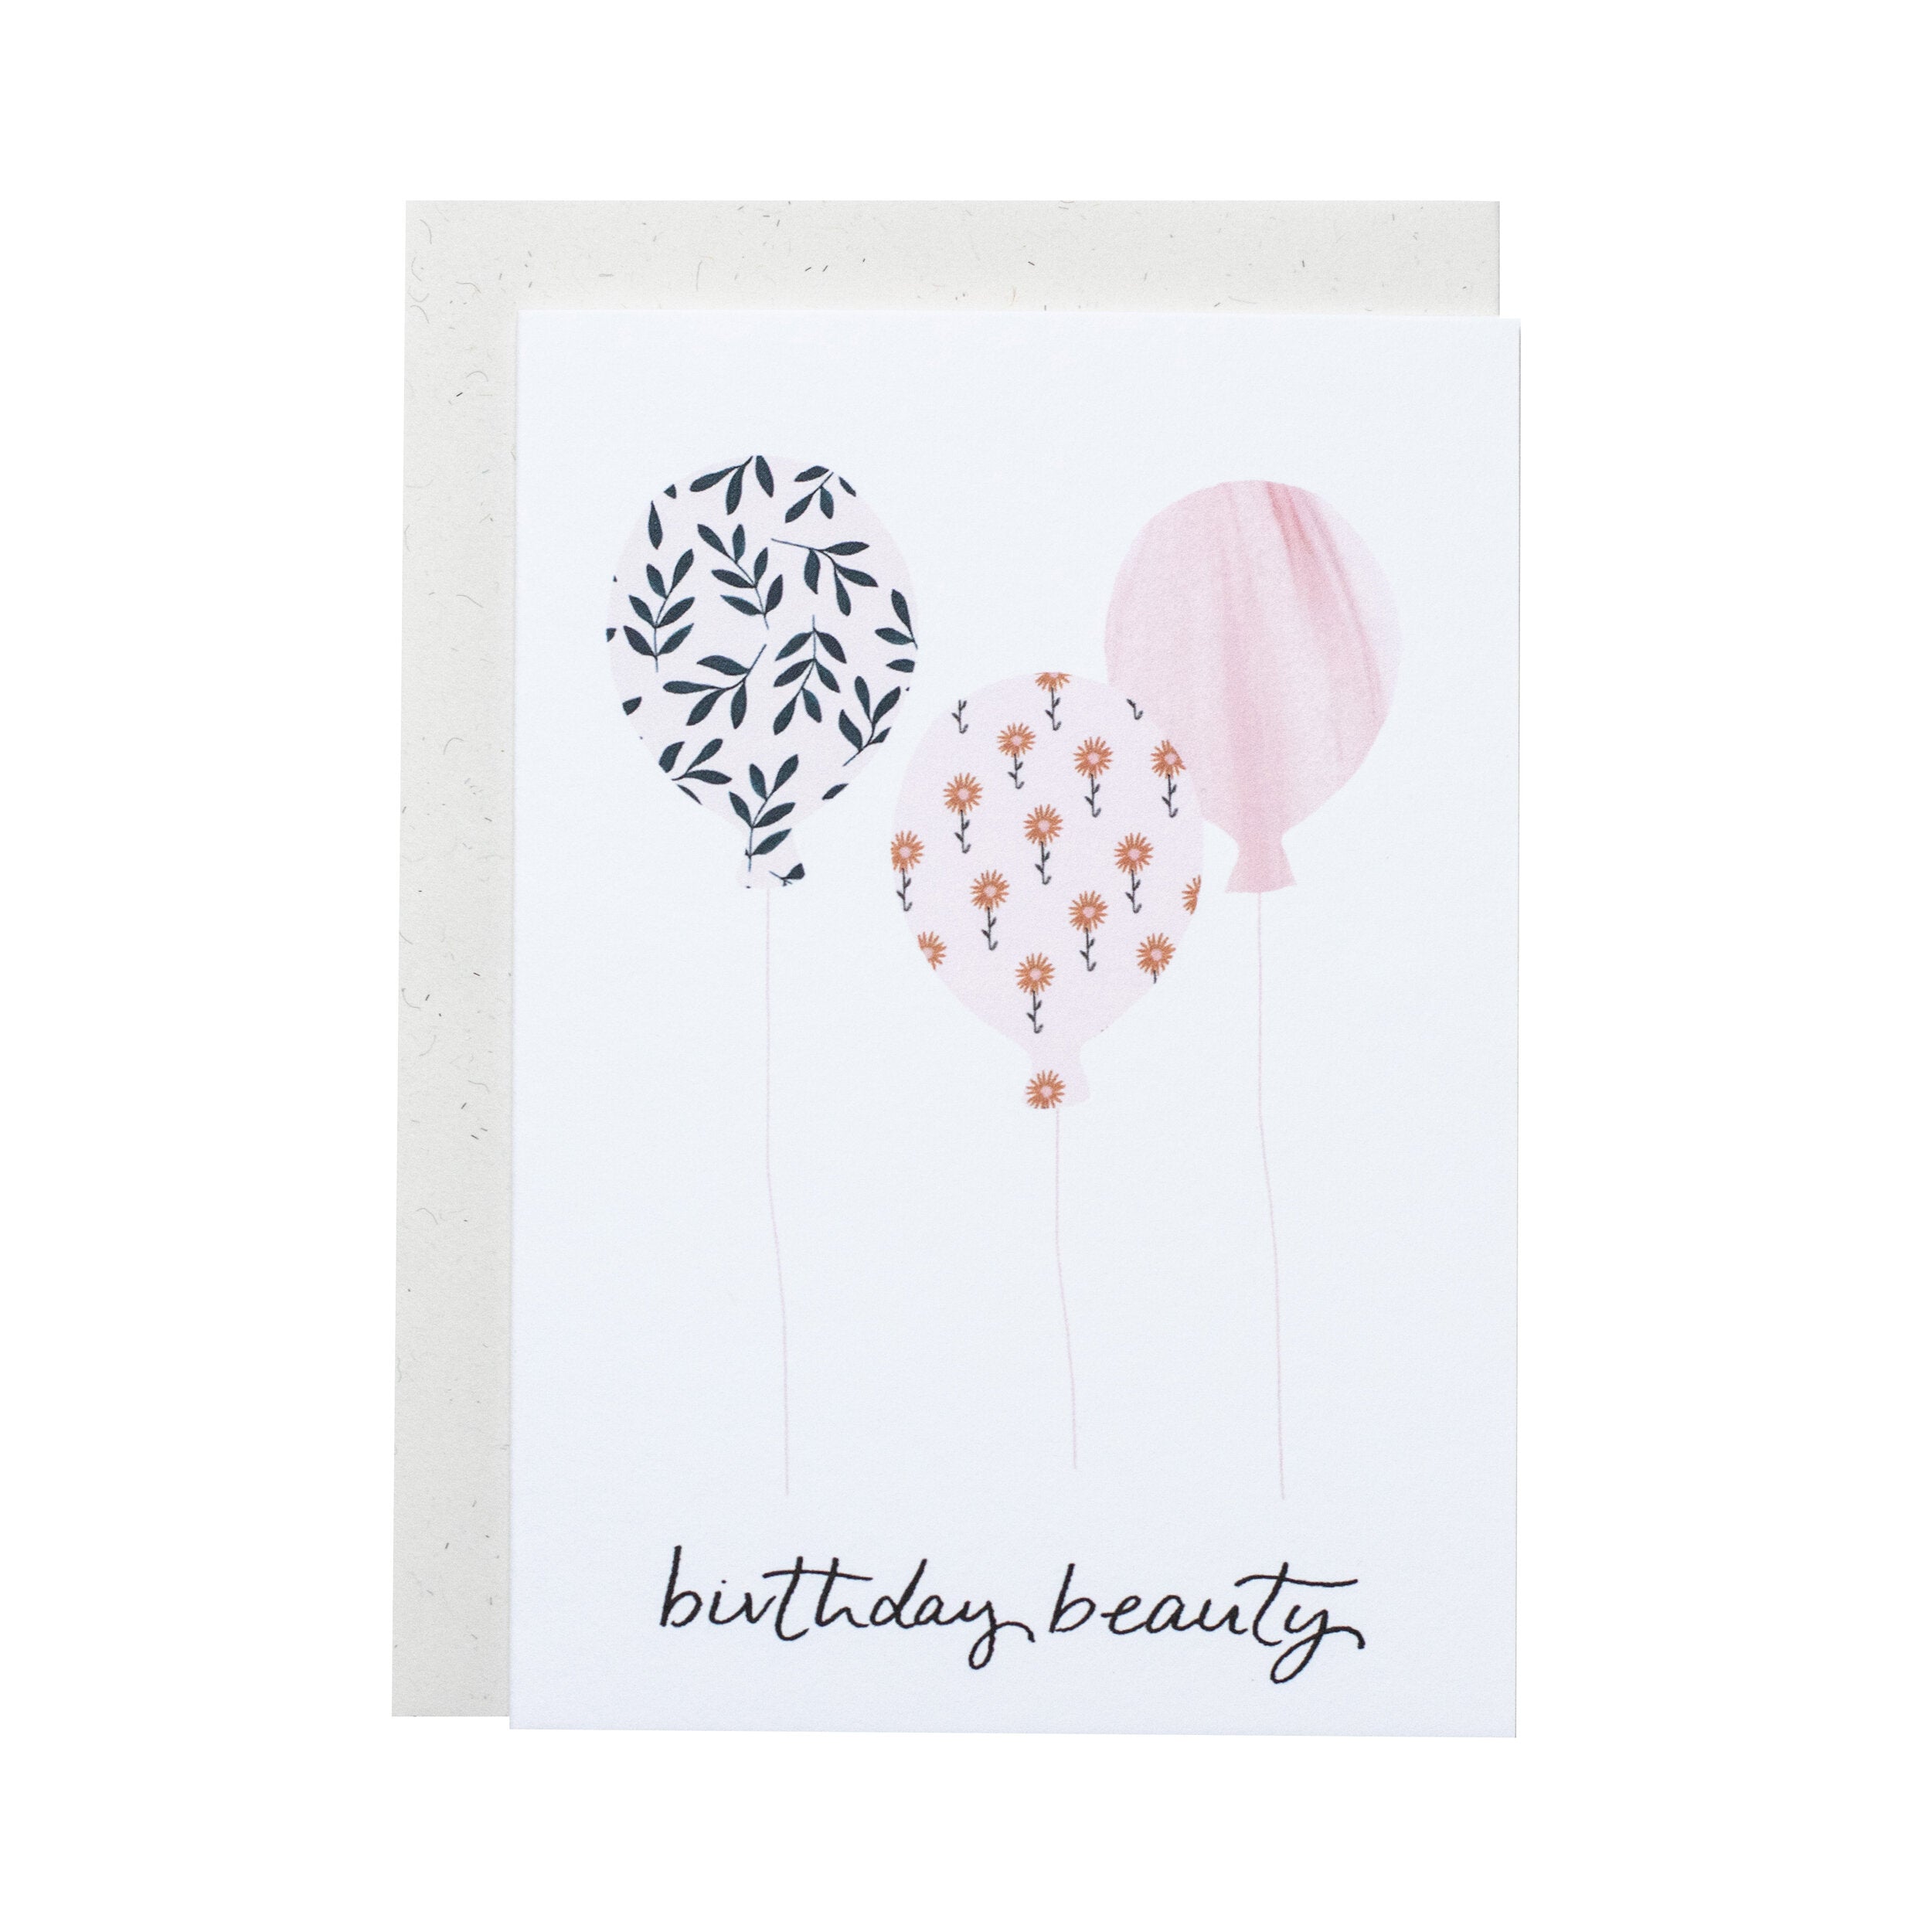 'Birthday Beauty' Greetings Card